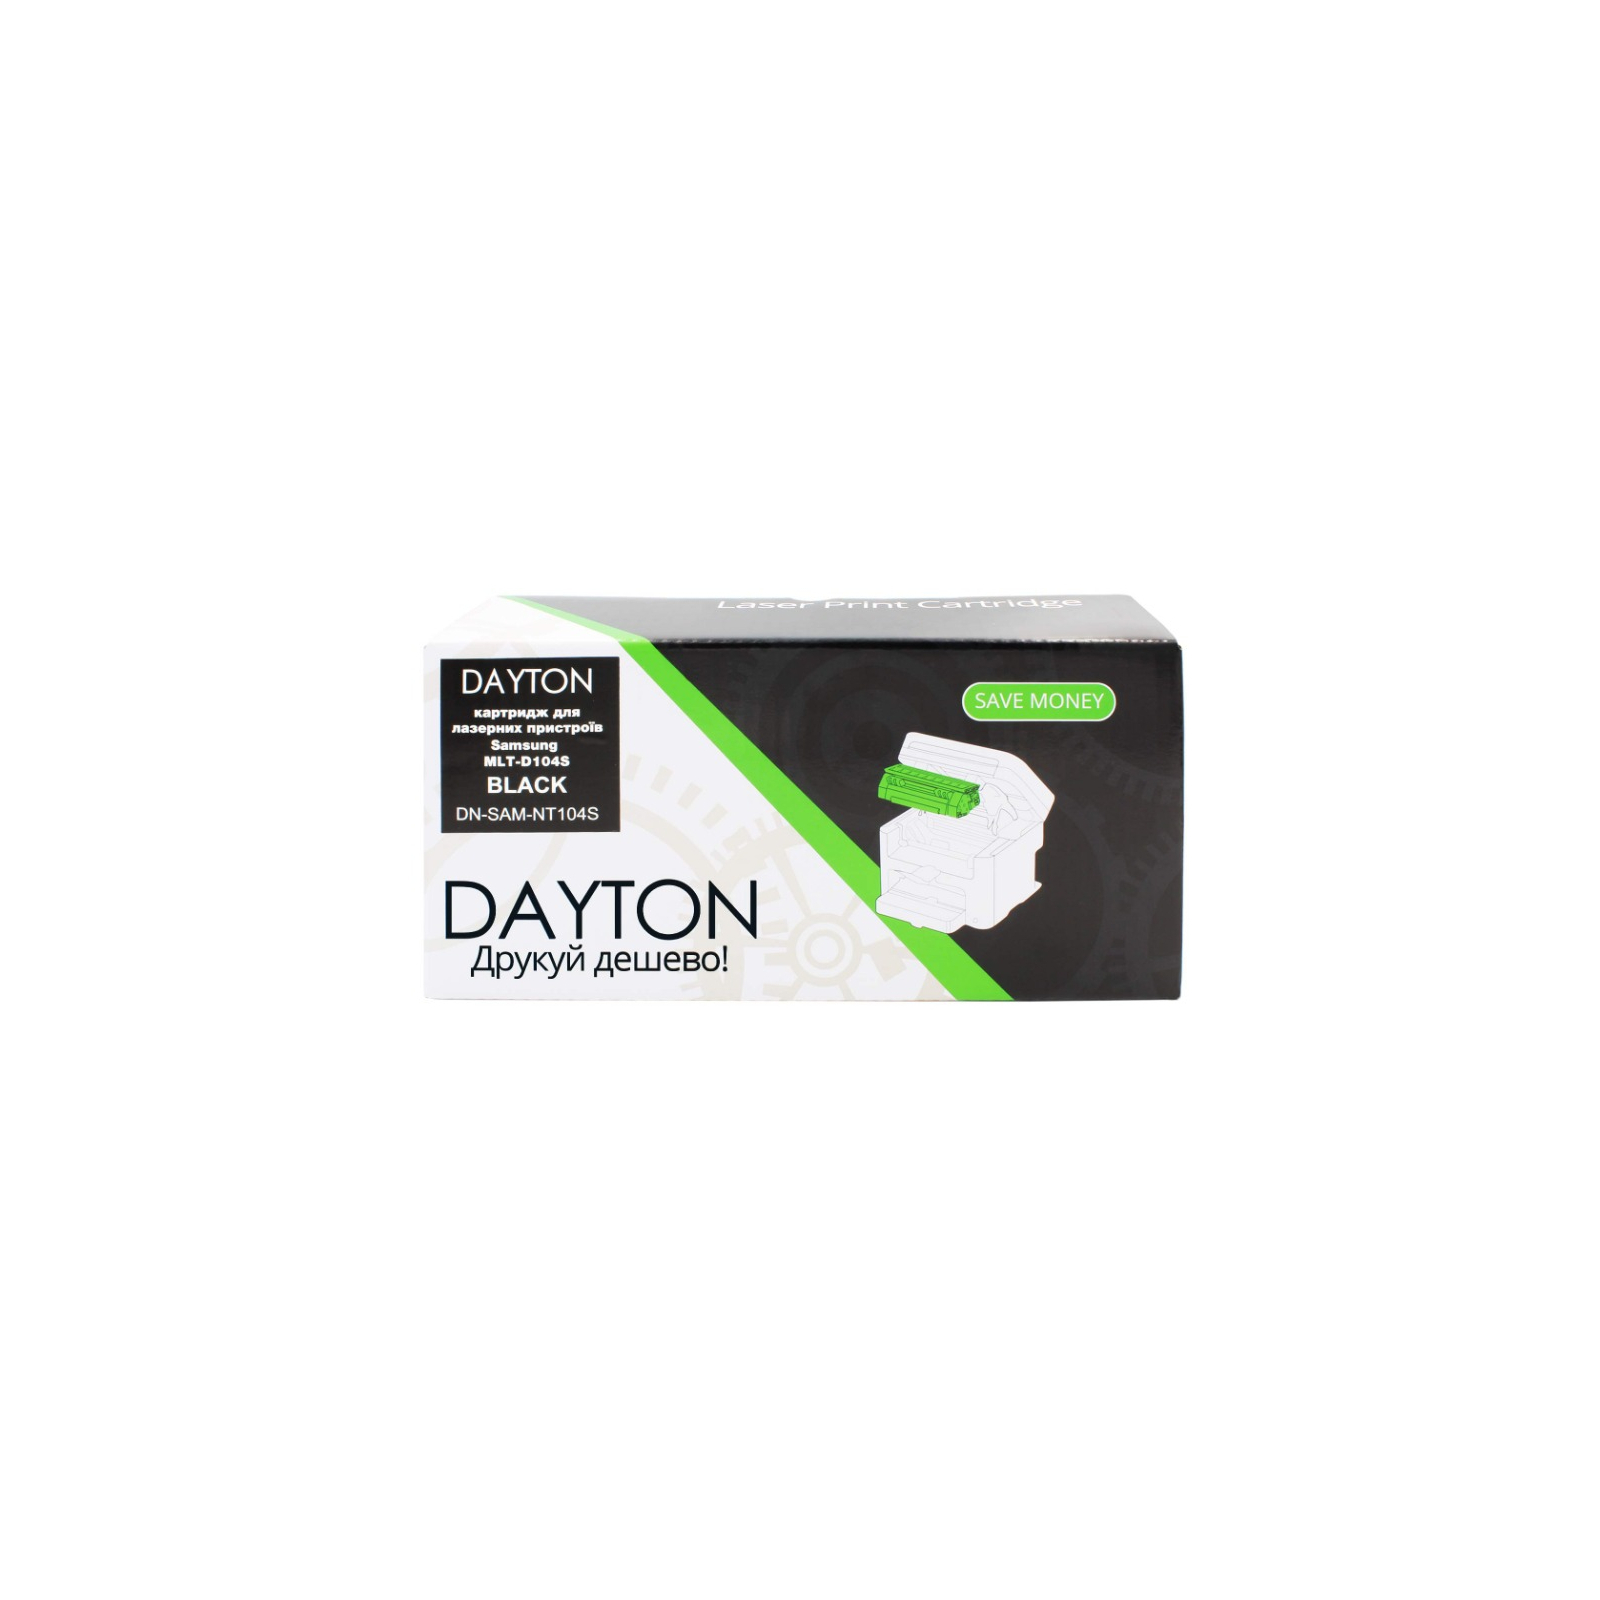 Картридж Dayton Samsung MLT-D104S 1.5k (DN-SAM-NT104S)